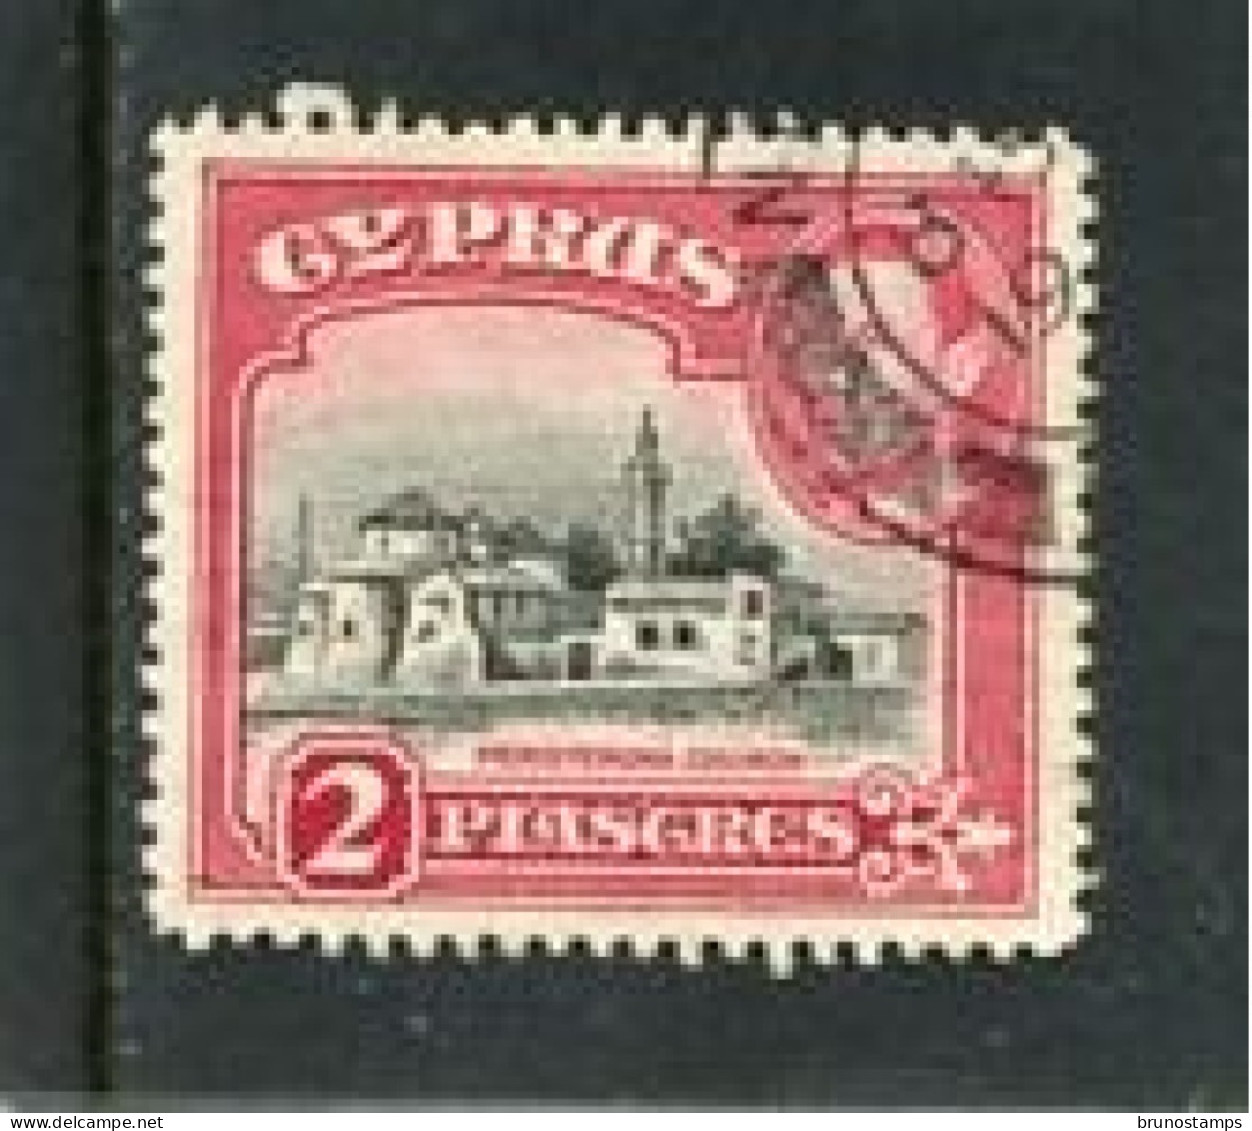 CYPRUS - 1938  GEORGE VI  2 Pi  RED  FINE USED - Chypre (...-1960)